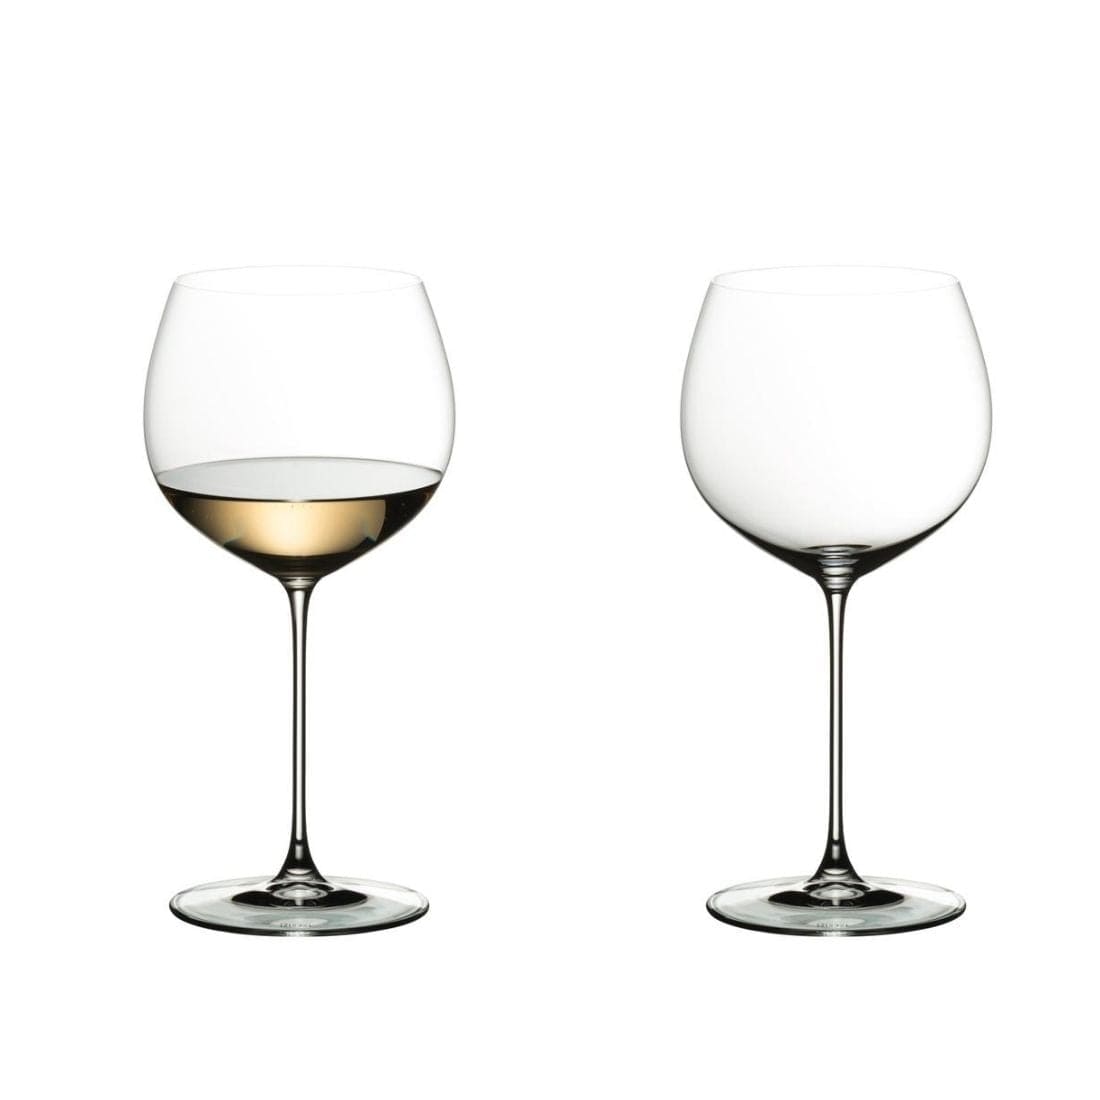 Riedel Veritas - Oaked Chardonnay Wine Glasses (2 Pack)